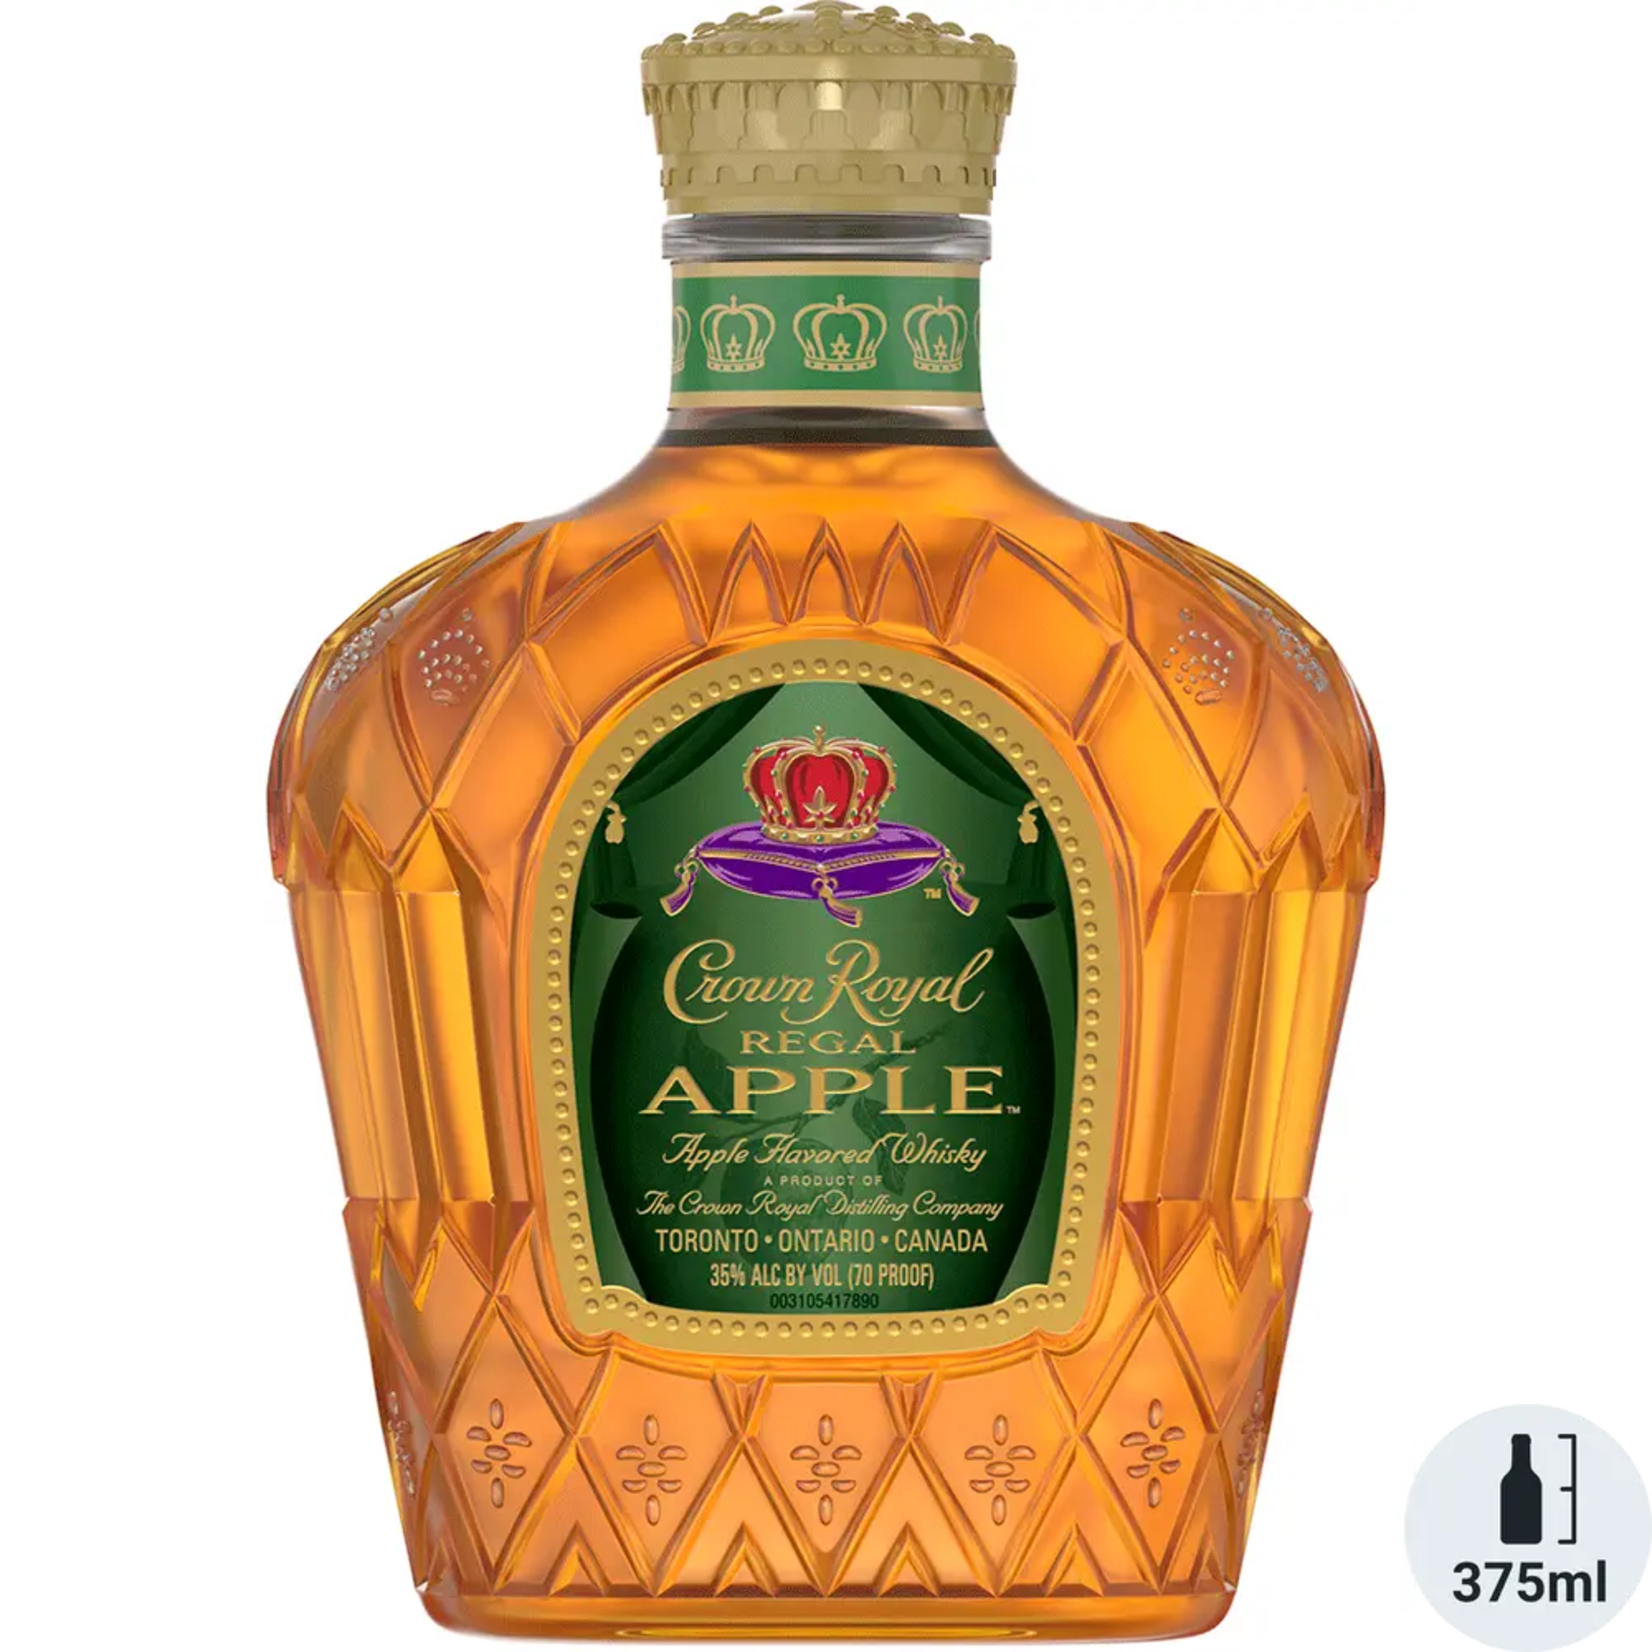 Crown Royal Crown Royal Apple Flavored Whisky Regal 70Proof 375ml